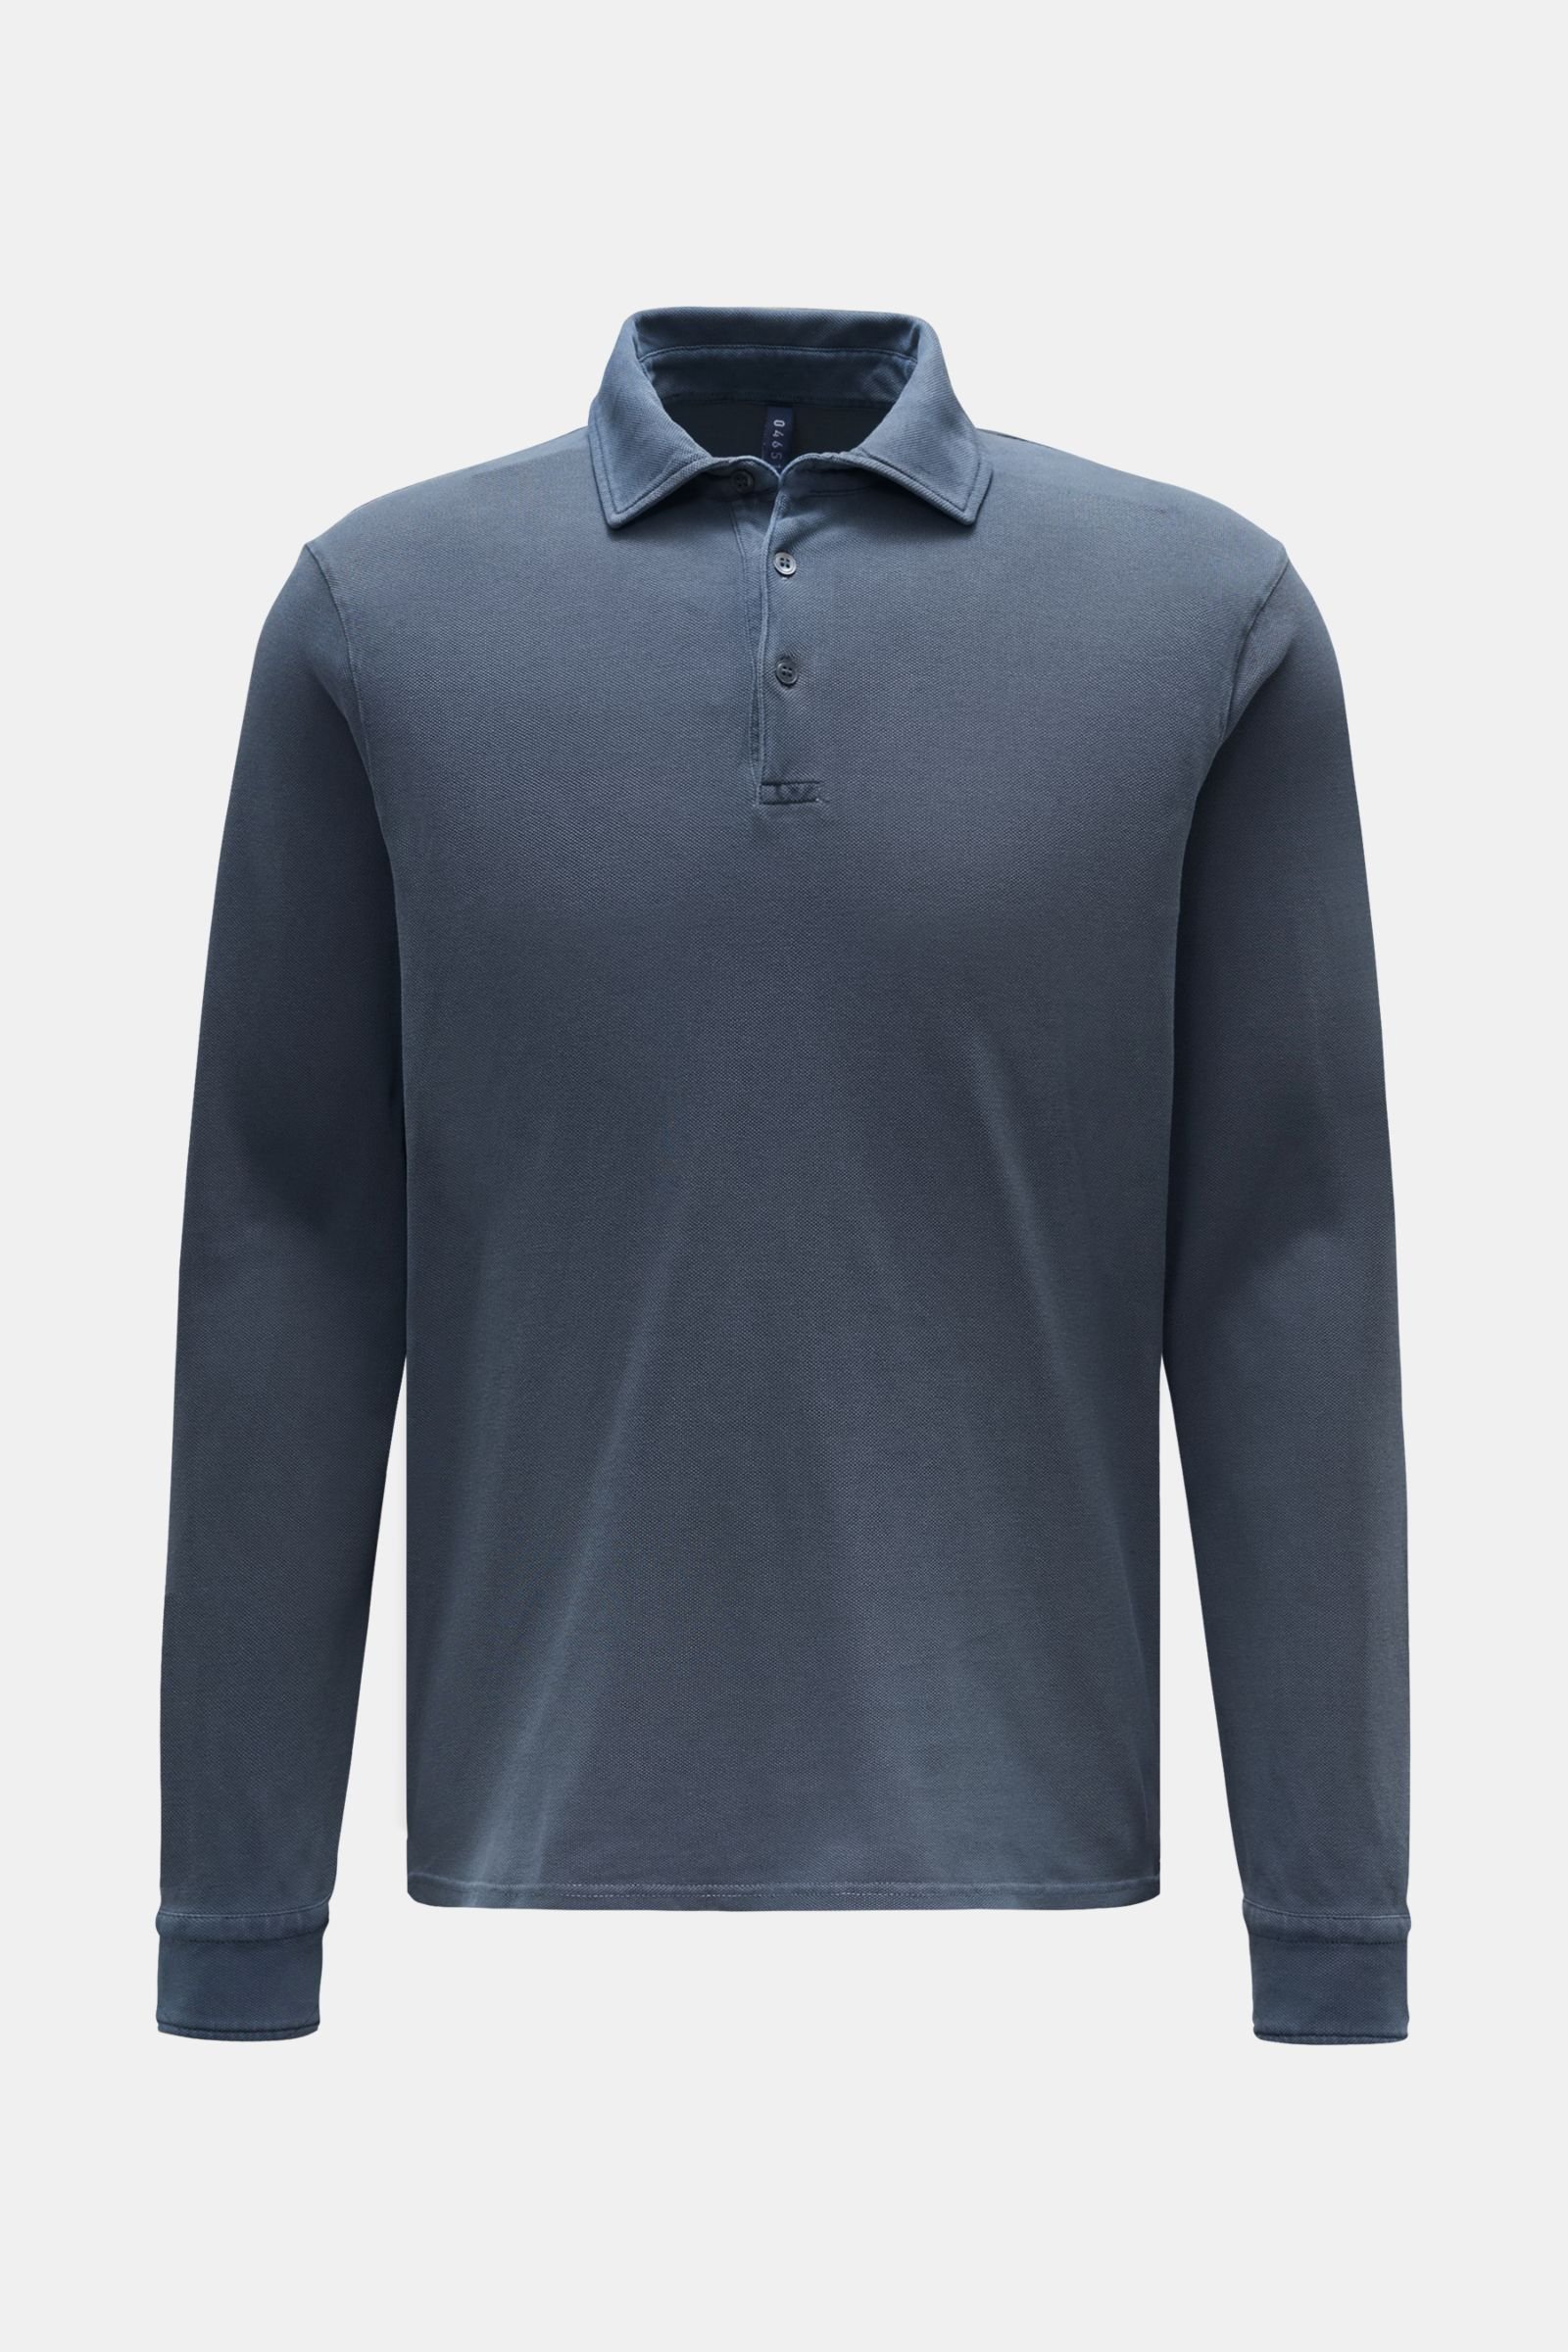 Long sleeve polo shirt grey-blue